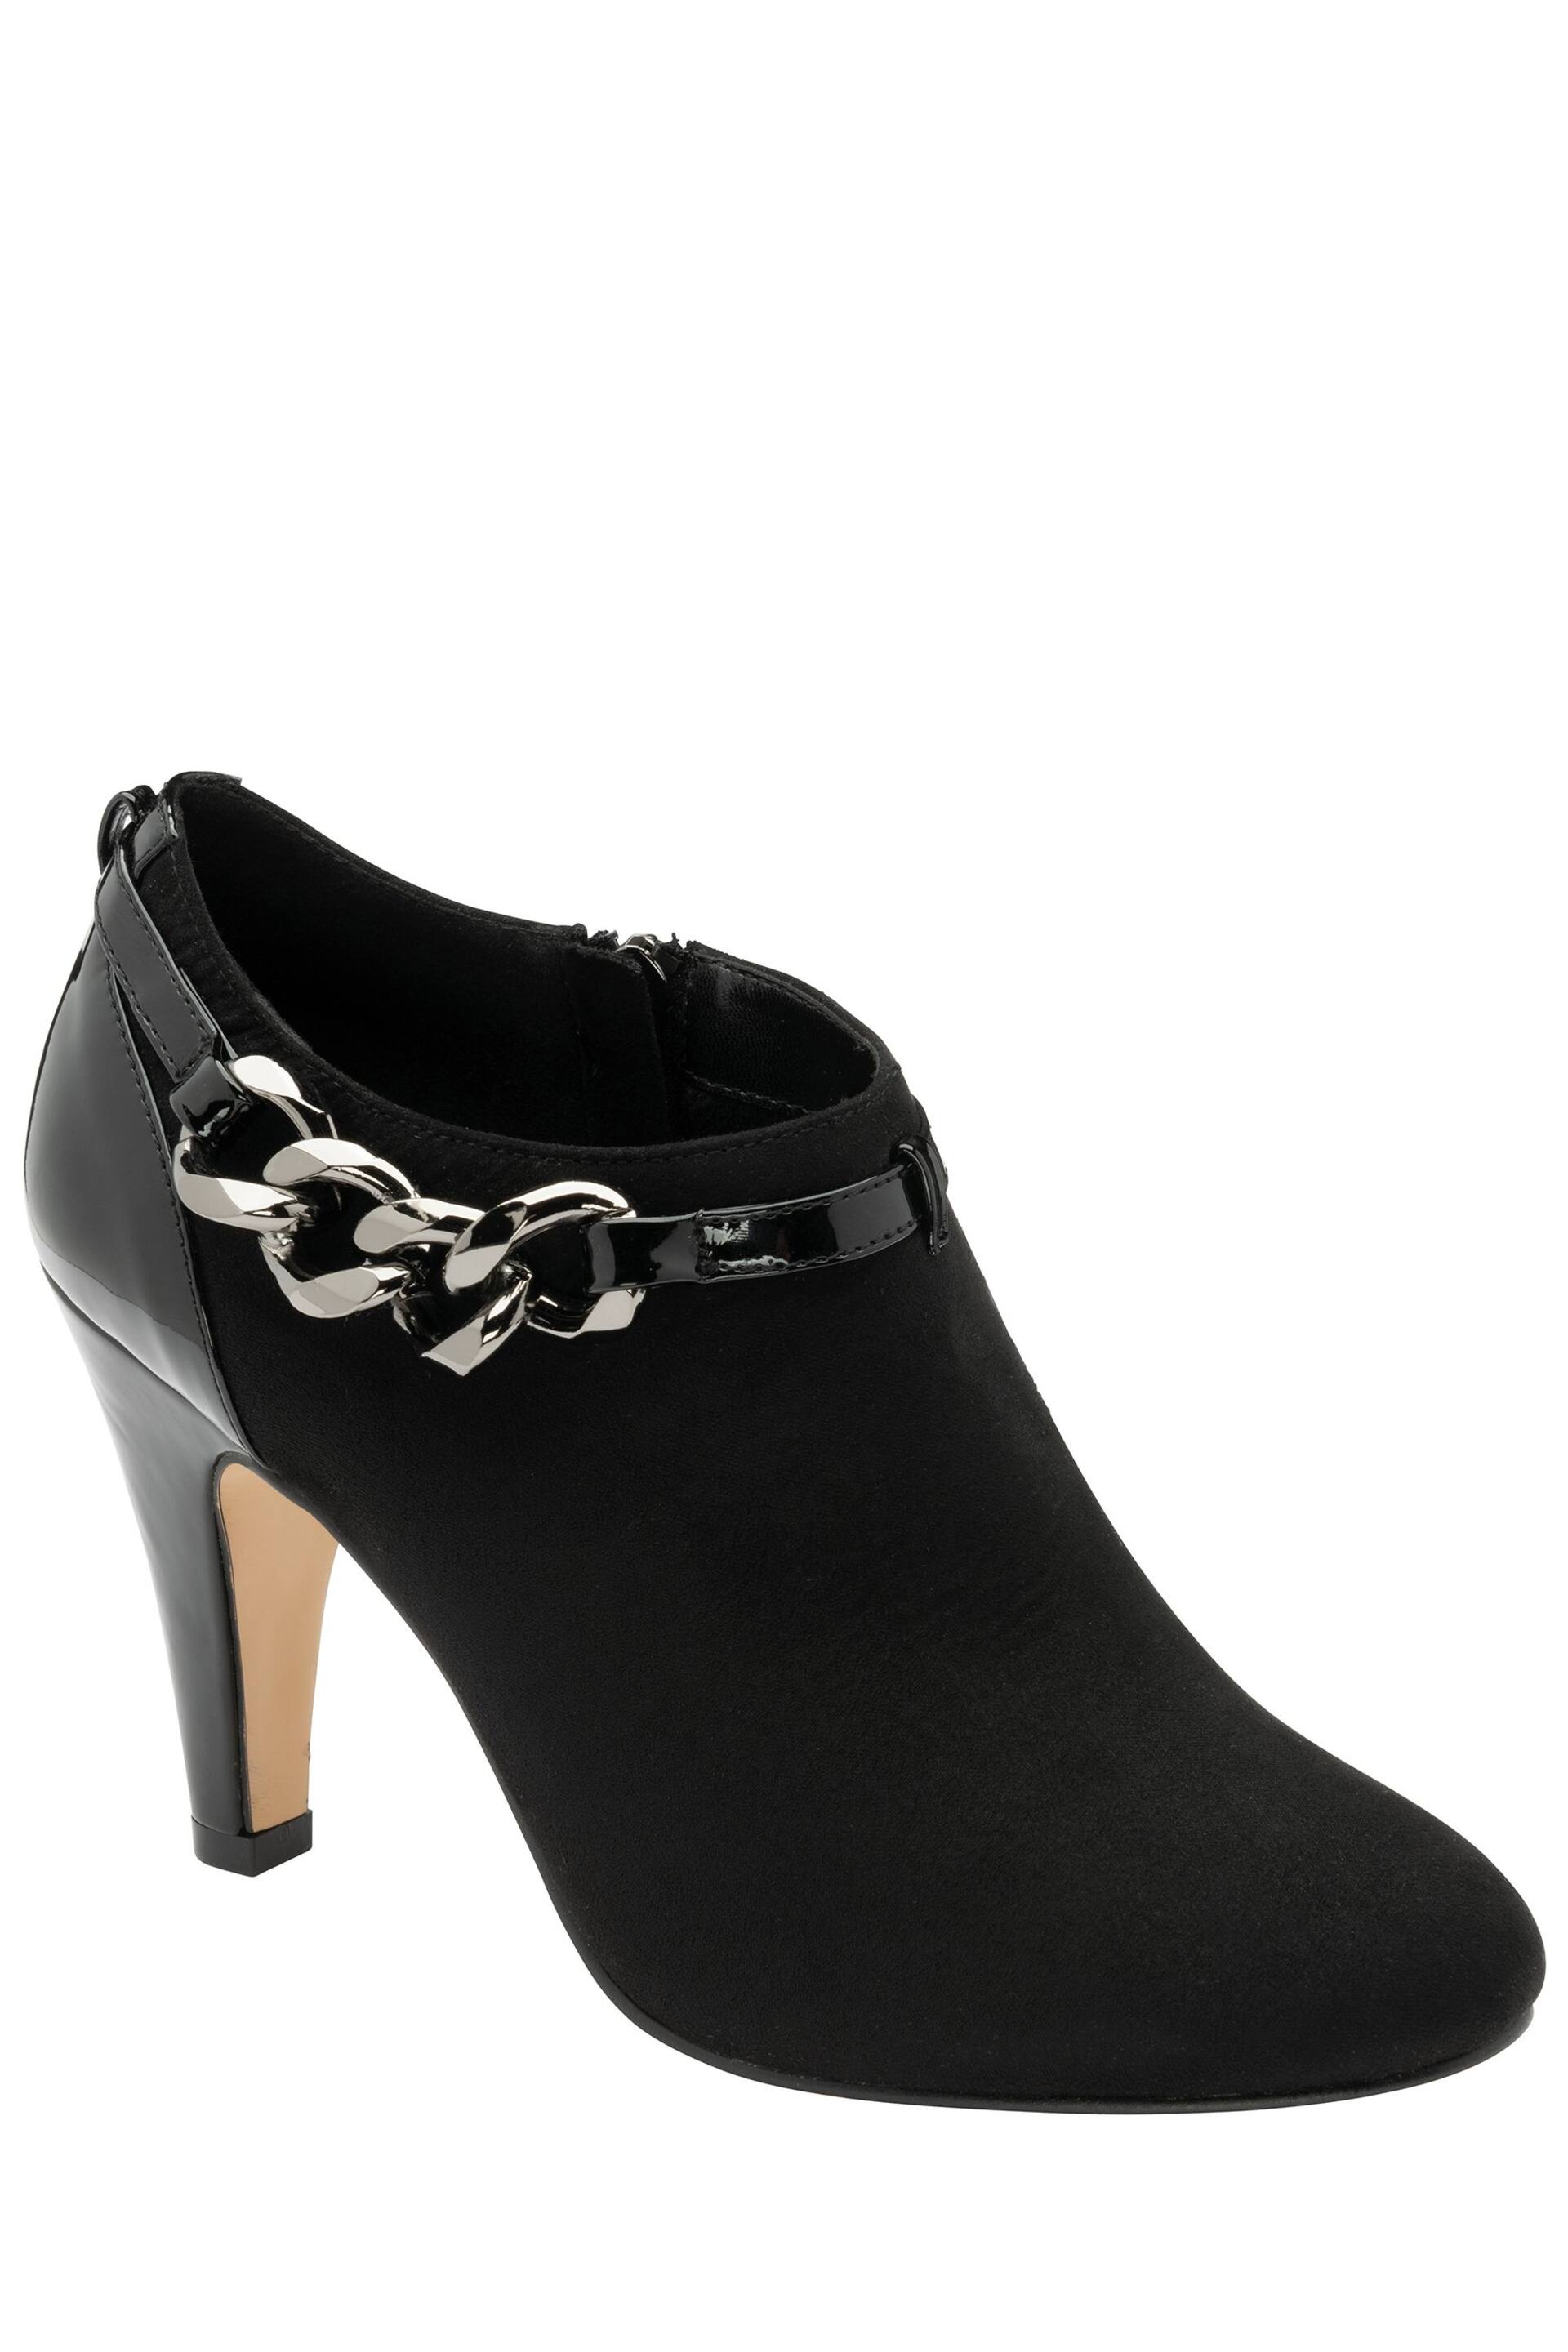 Lotus Black Heeled Shoe Boots - Image 1 of 4